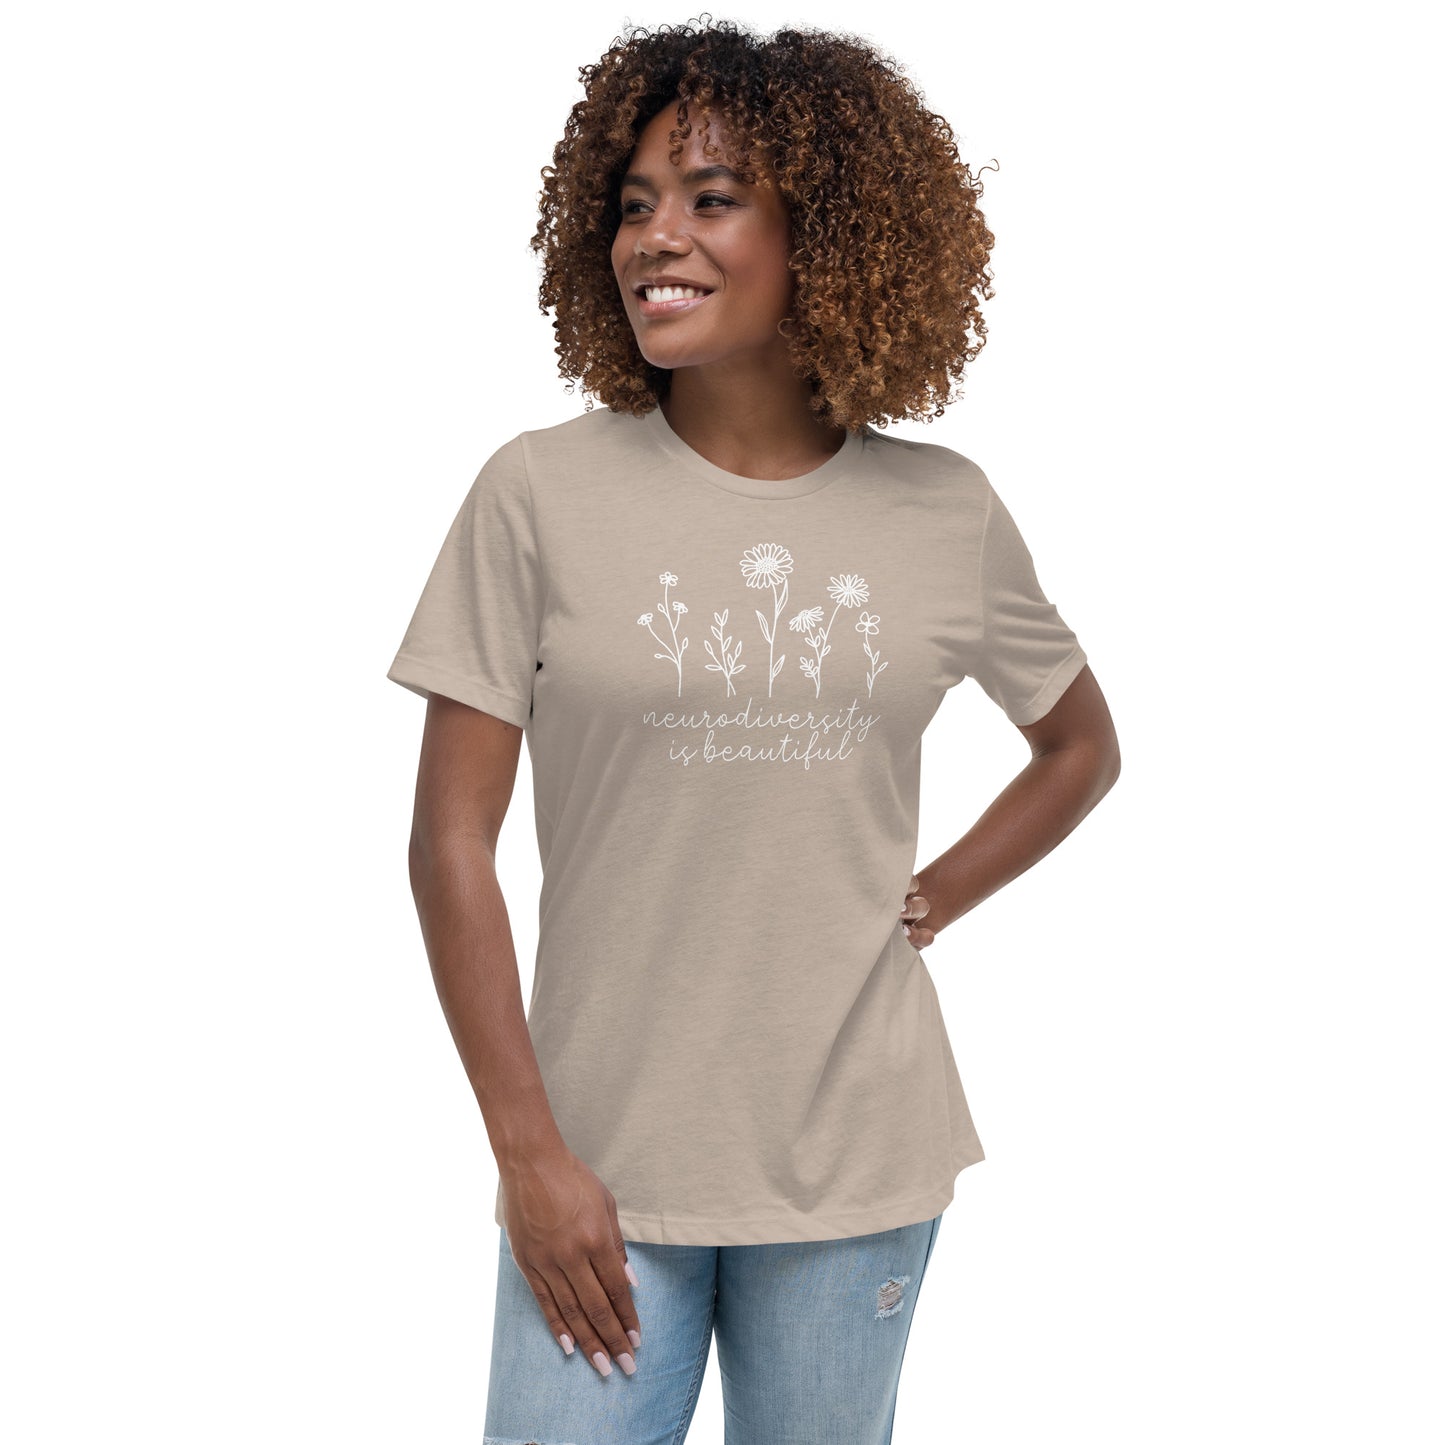 Neurodiversity is Beautiful - Women’s T-shirt